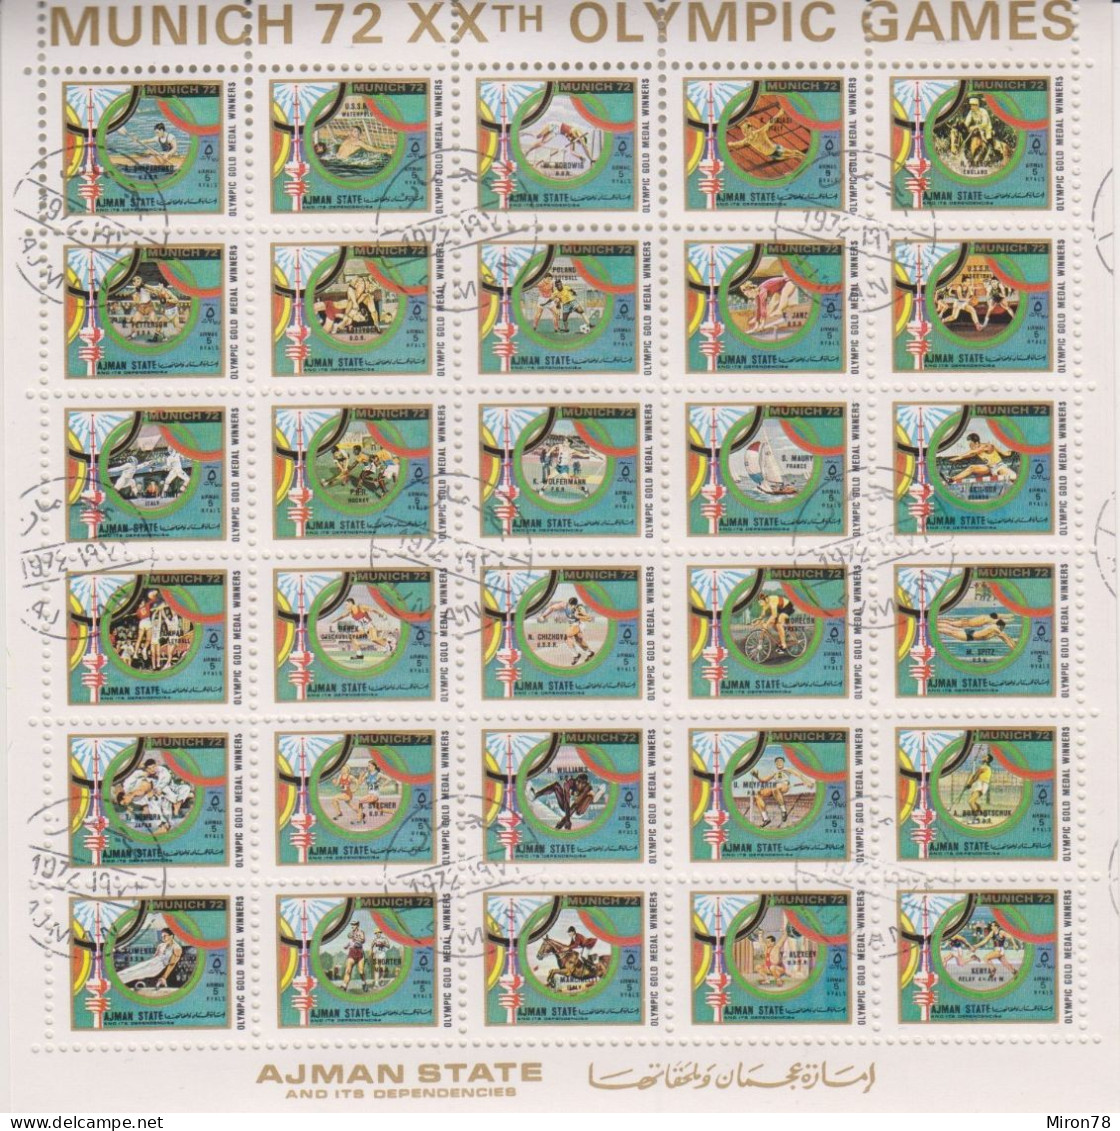 AJMAN OLYMPIC GAMES MUNICH 1972 #1605-34 SH USED (MNH-MICHEL 150 EURO!!!) - Sin Clasificación